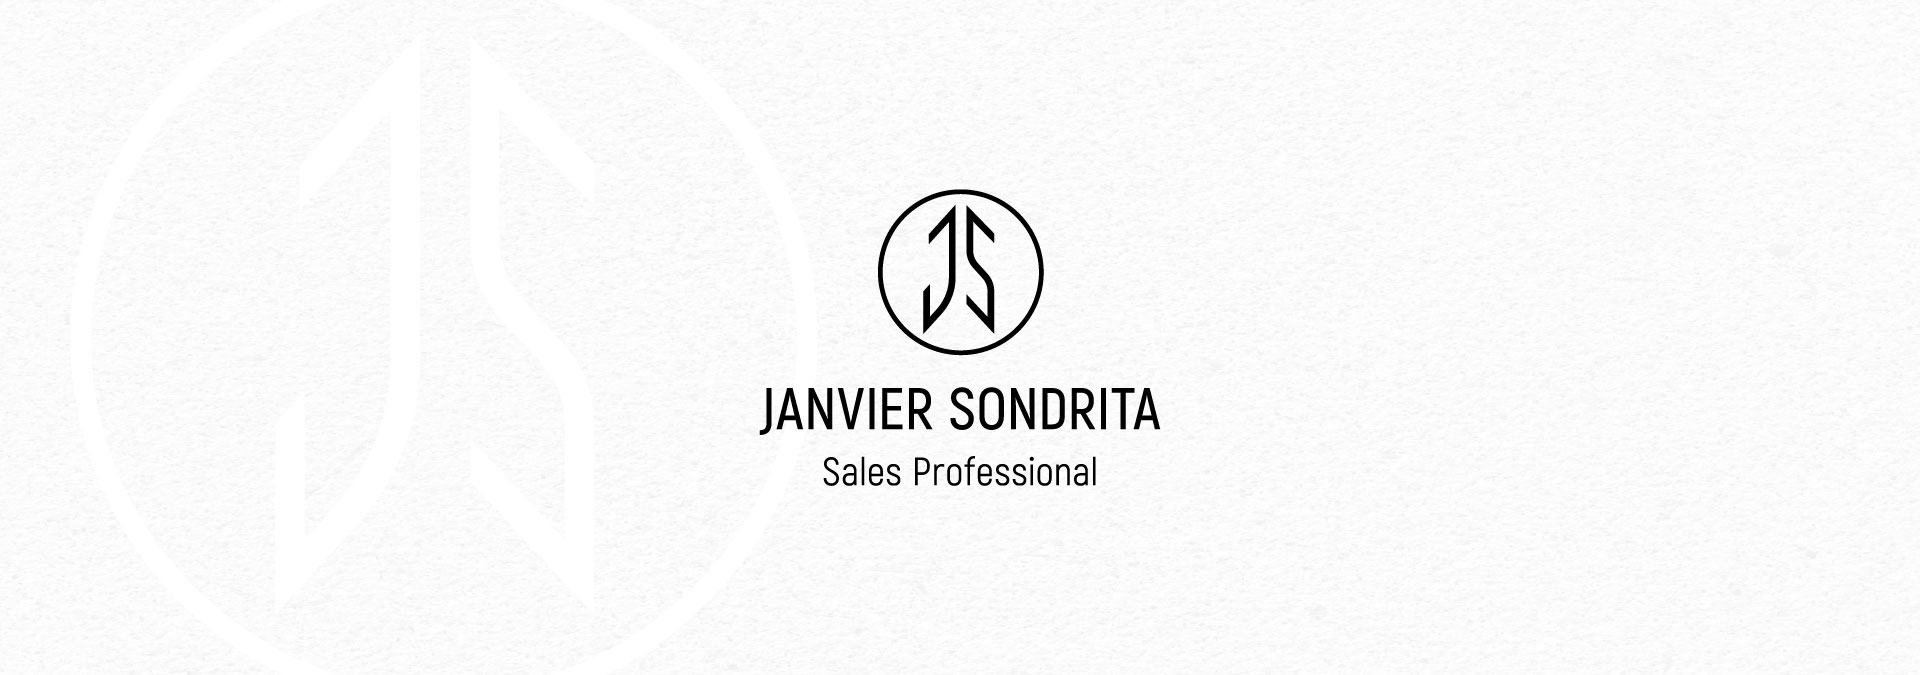 Janvier Sondrita Sales Professional Logo